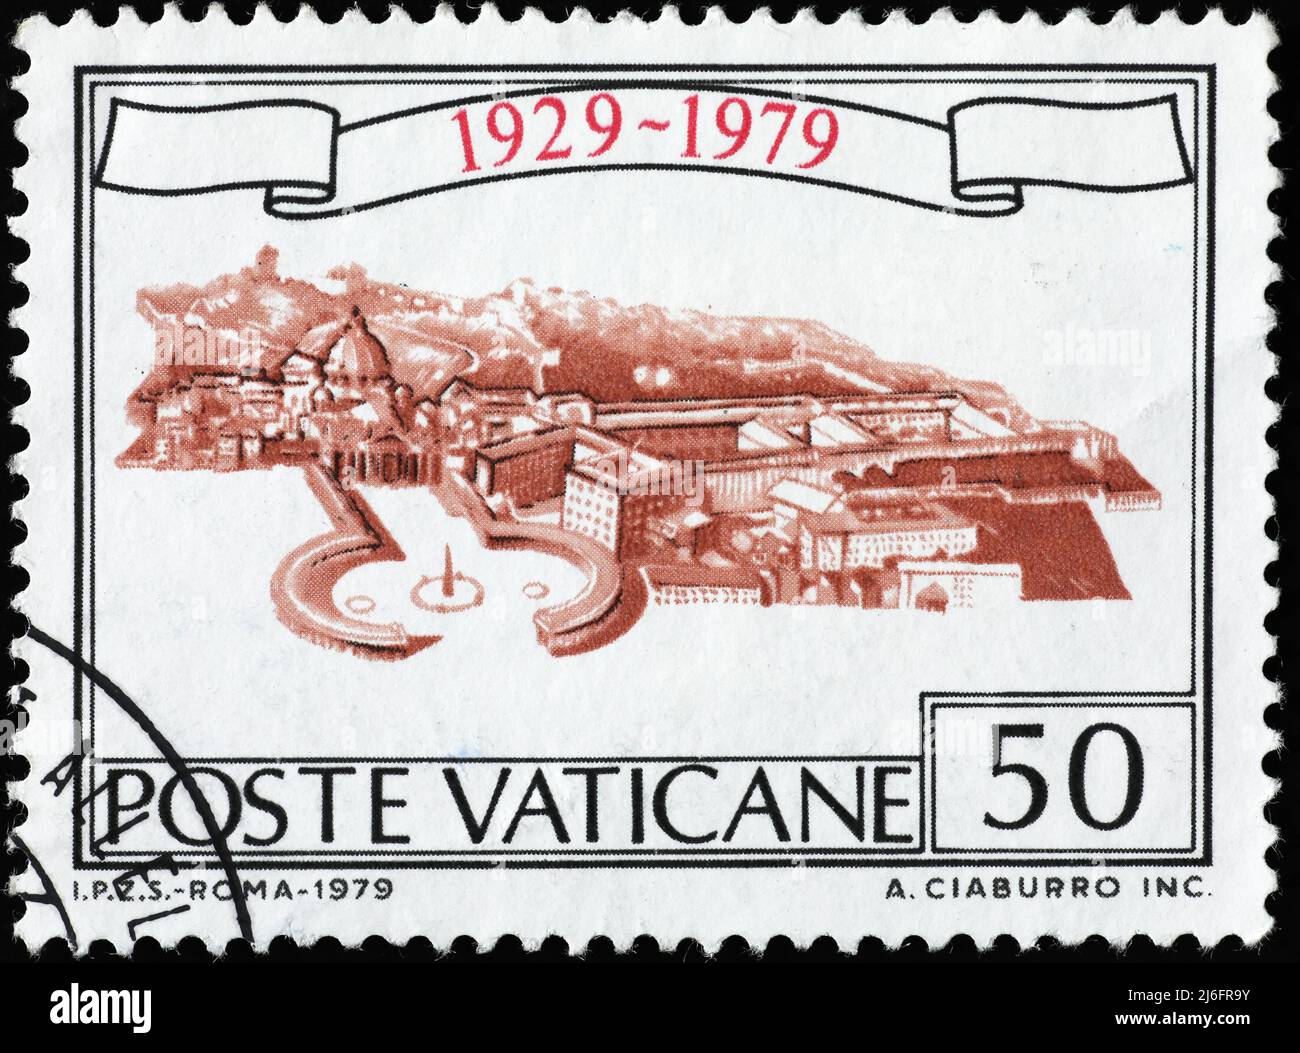 Vatican City on vintage postage stamp Stock Photo